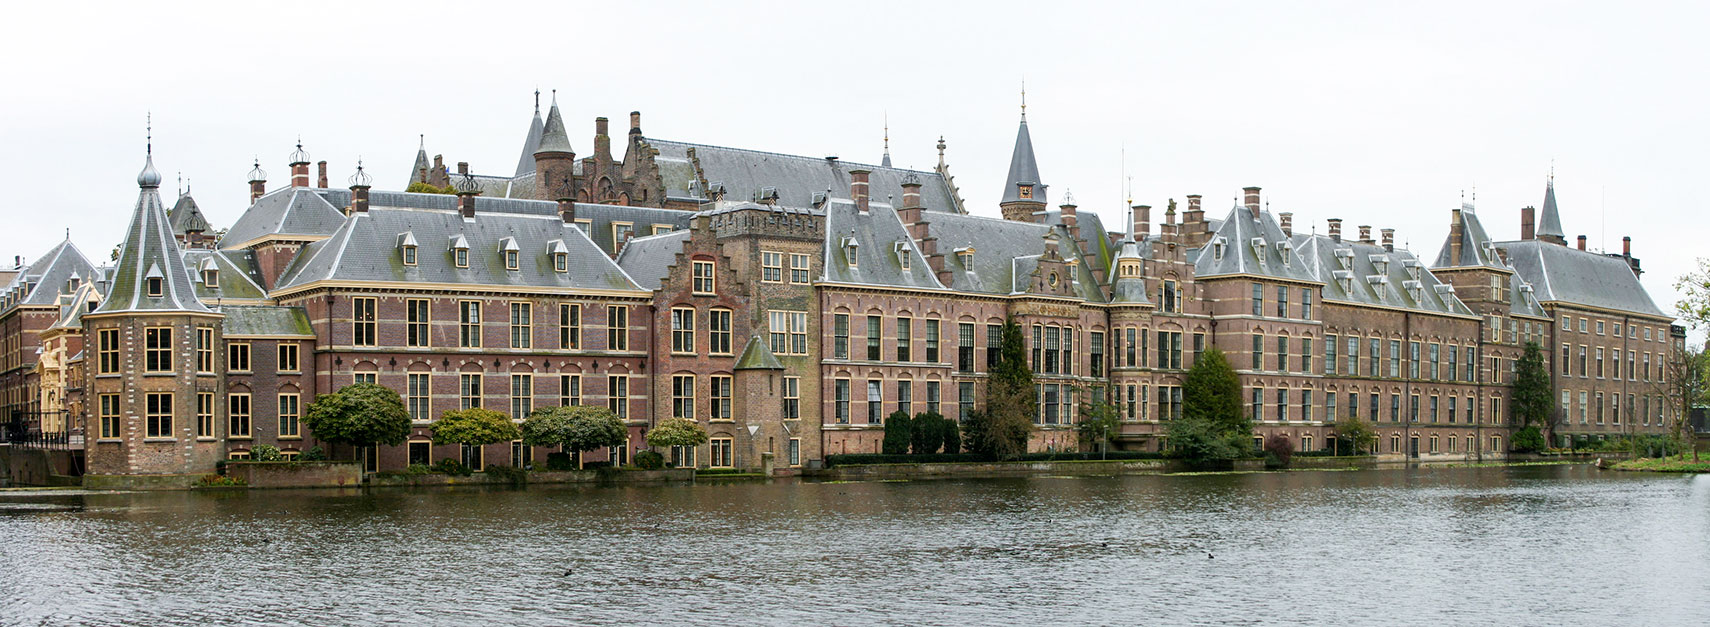 Kader sectie ik heb nodig Google Map of the City of Den Haag, Netherlands - Nations Online Project